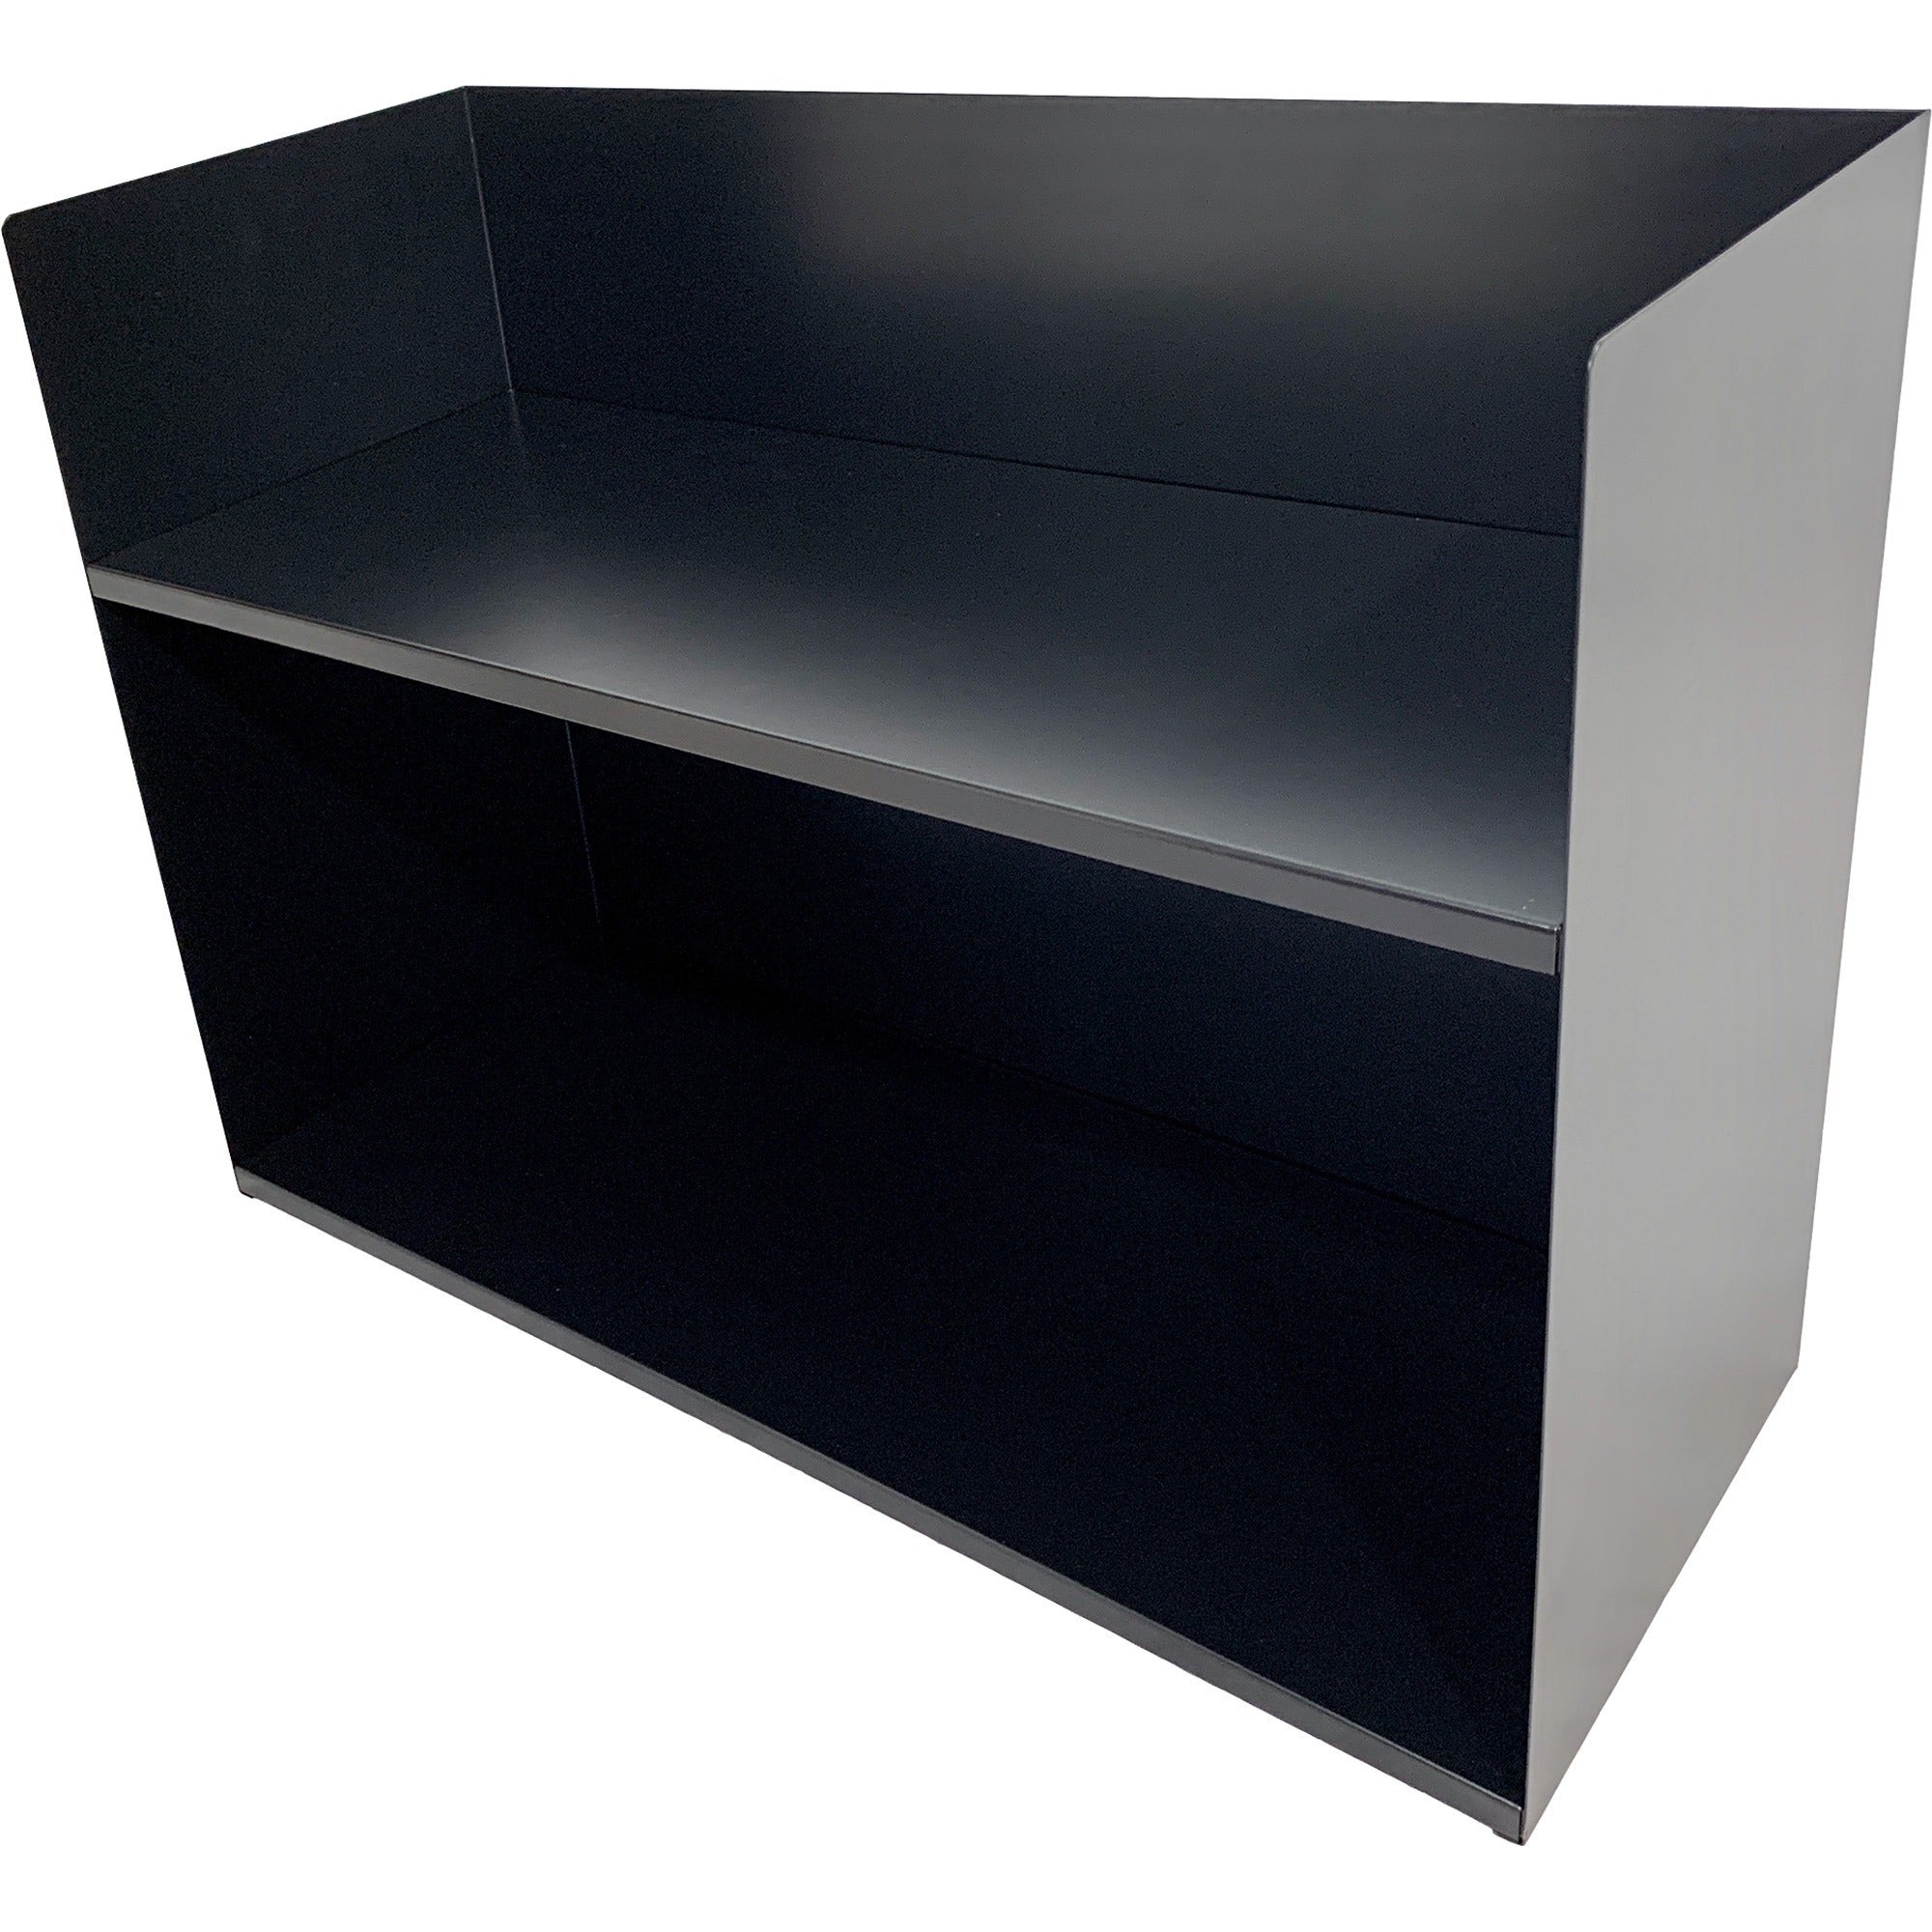 huron-2-tier-book-rack-2-compartments-2-tiers-horizontal-20-height-x-29-width-x-103-depth-durable-black-steel-1-each_hurhasz0177 - 1